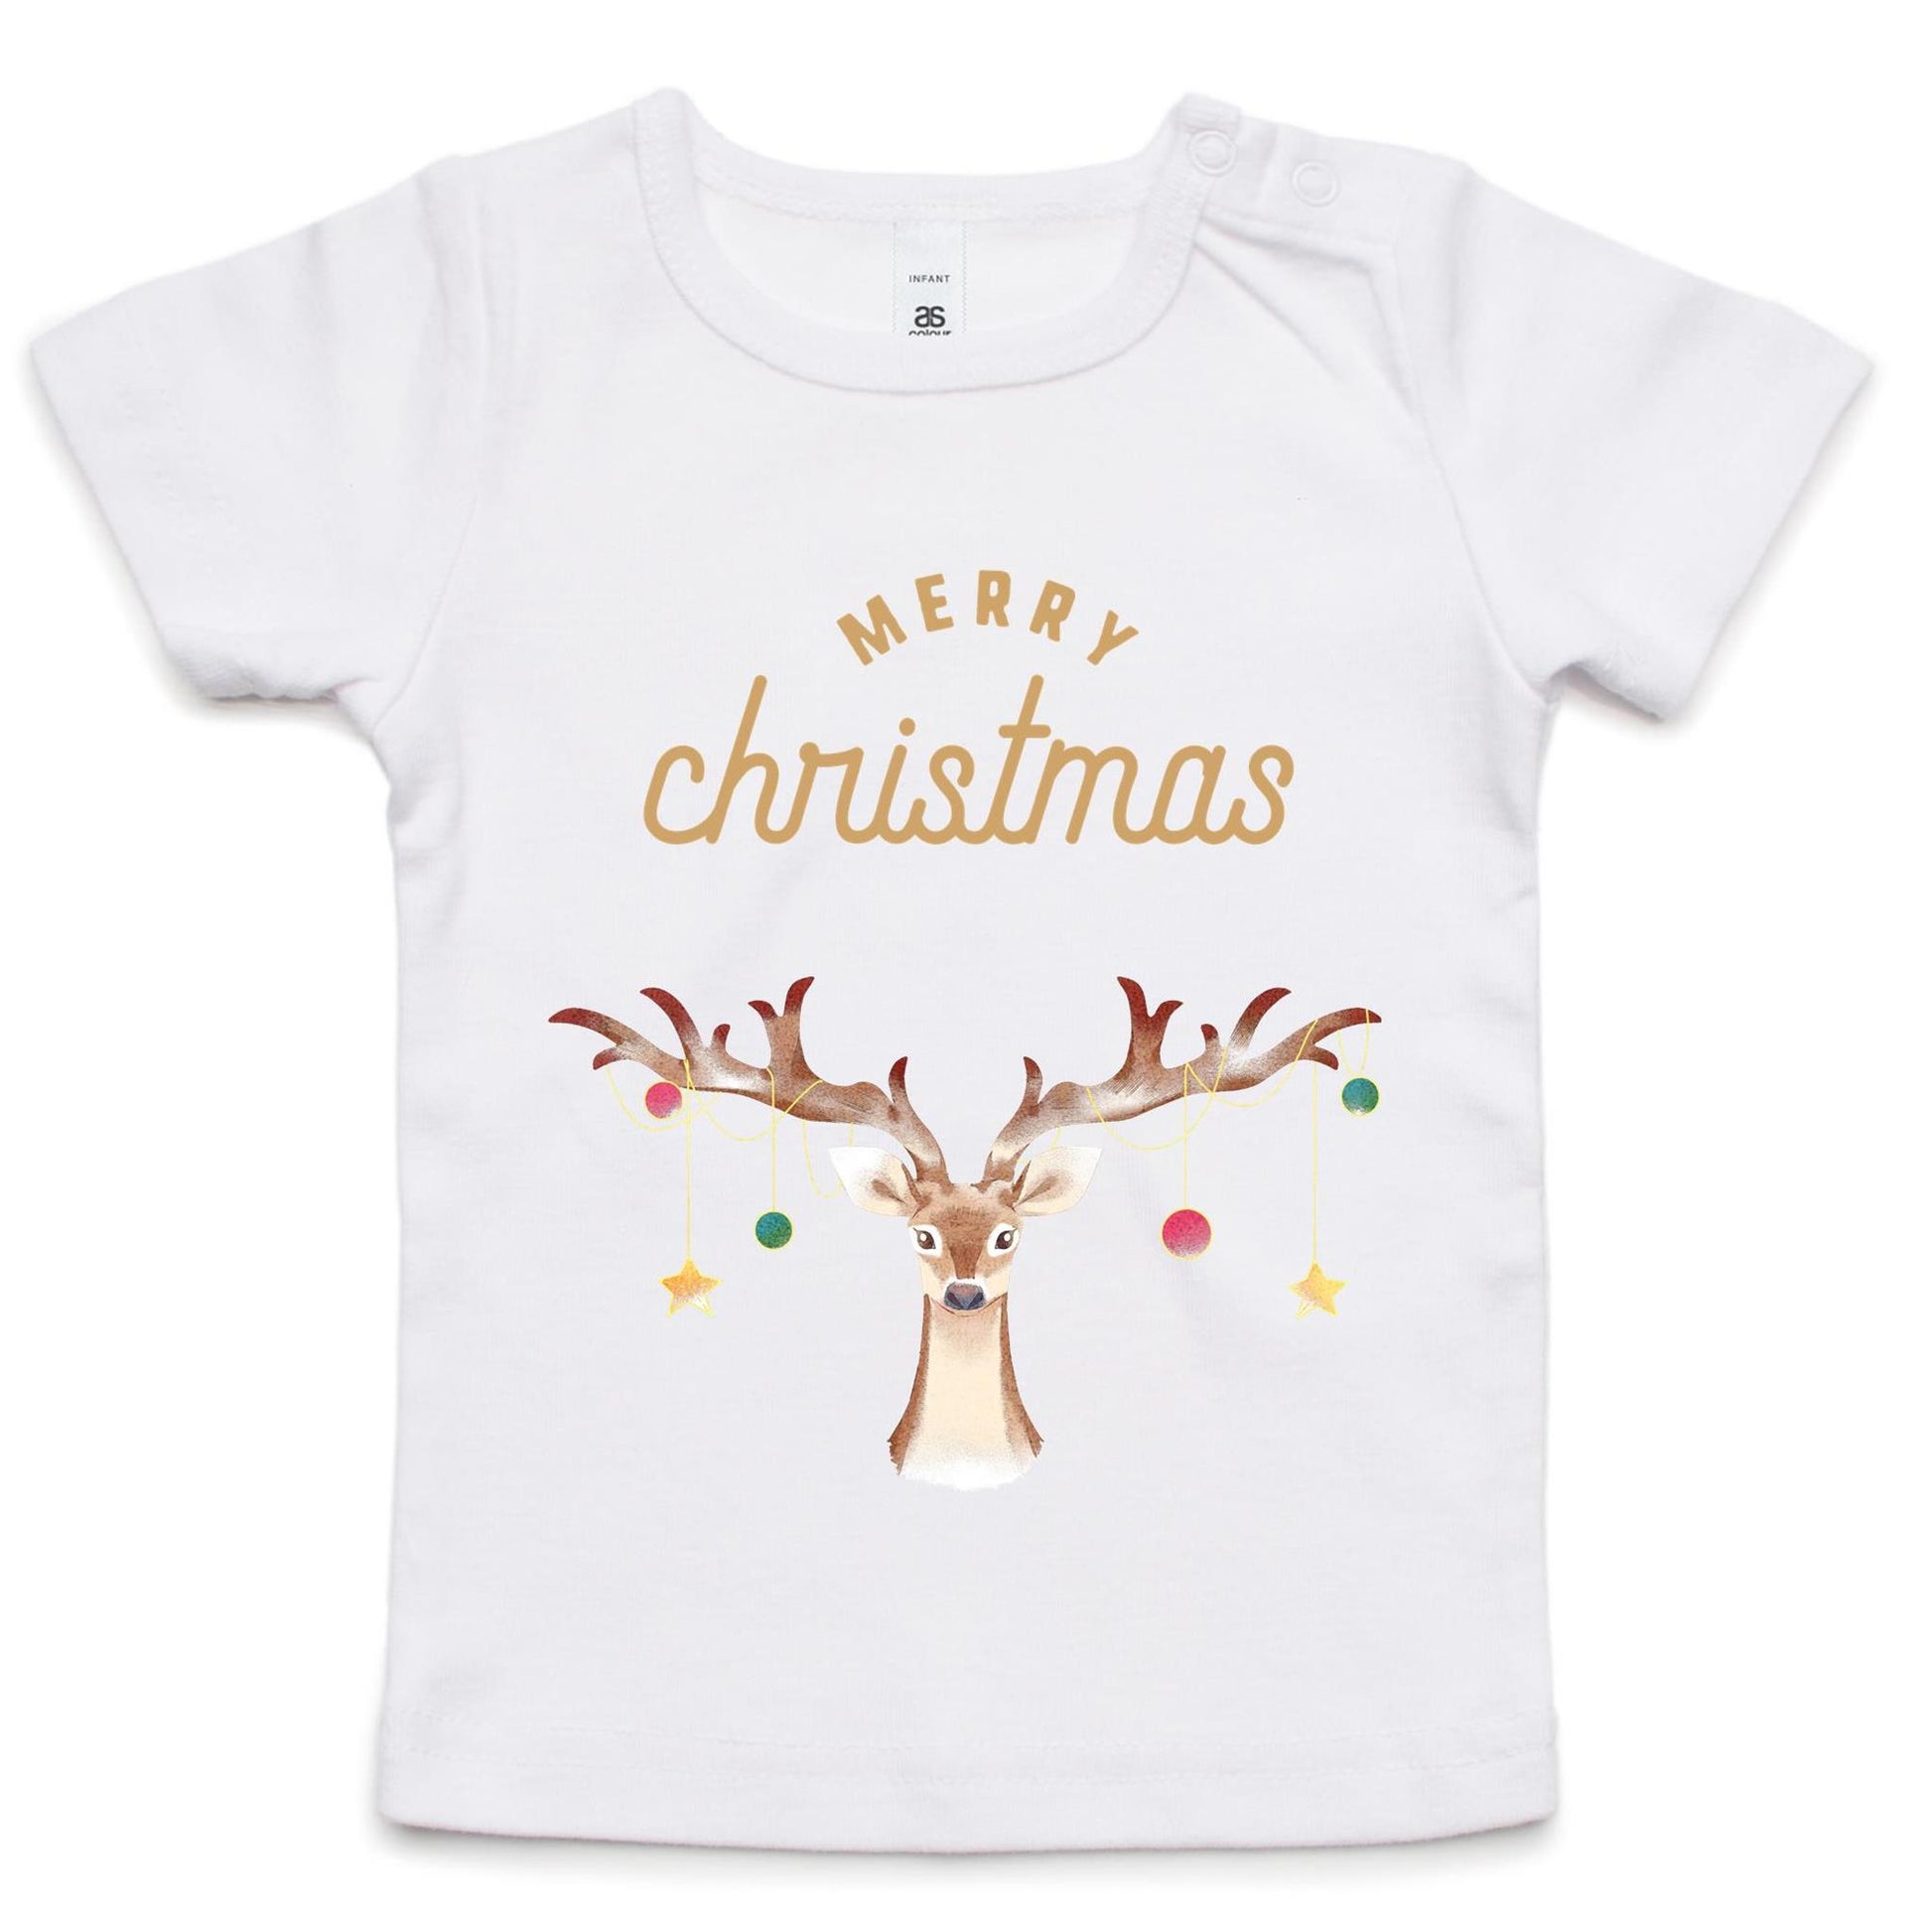 Merry Christmas Reindeer - Baby T-shirt White Christmas Baby T-shirt Merry Christmas